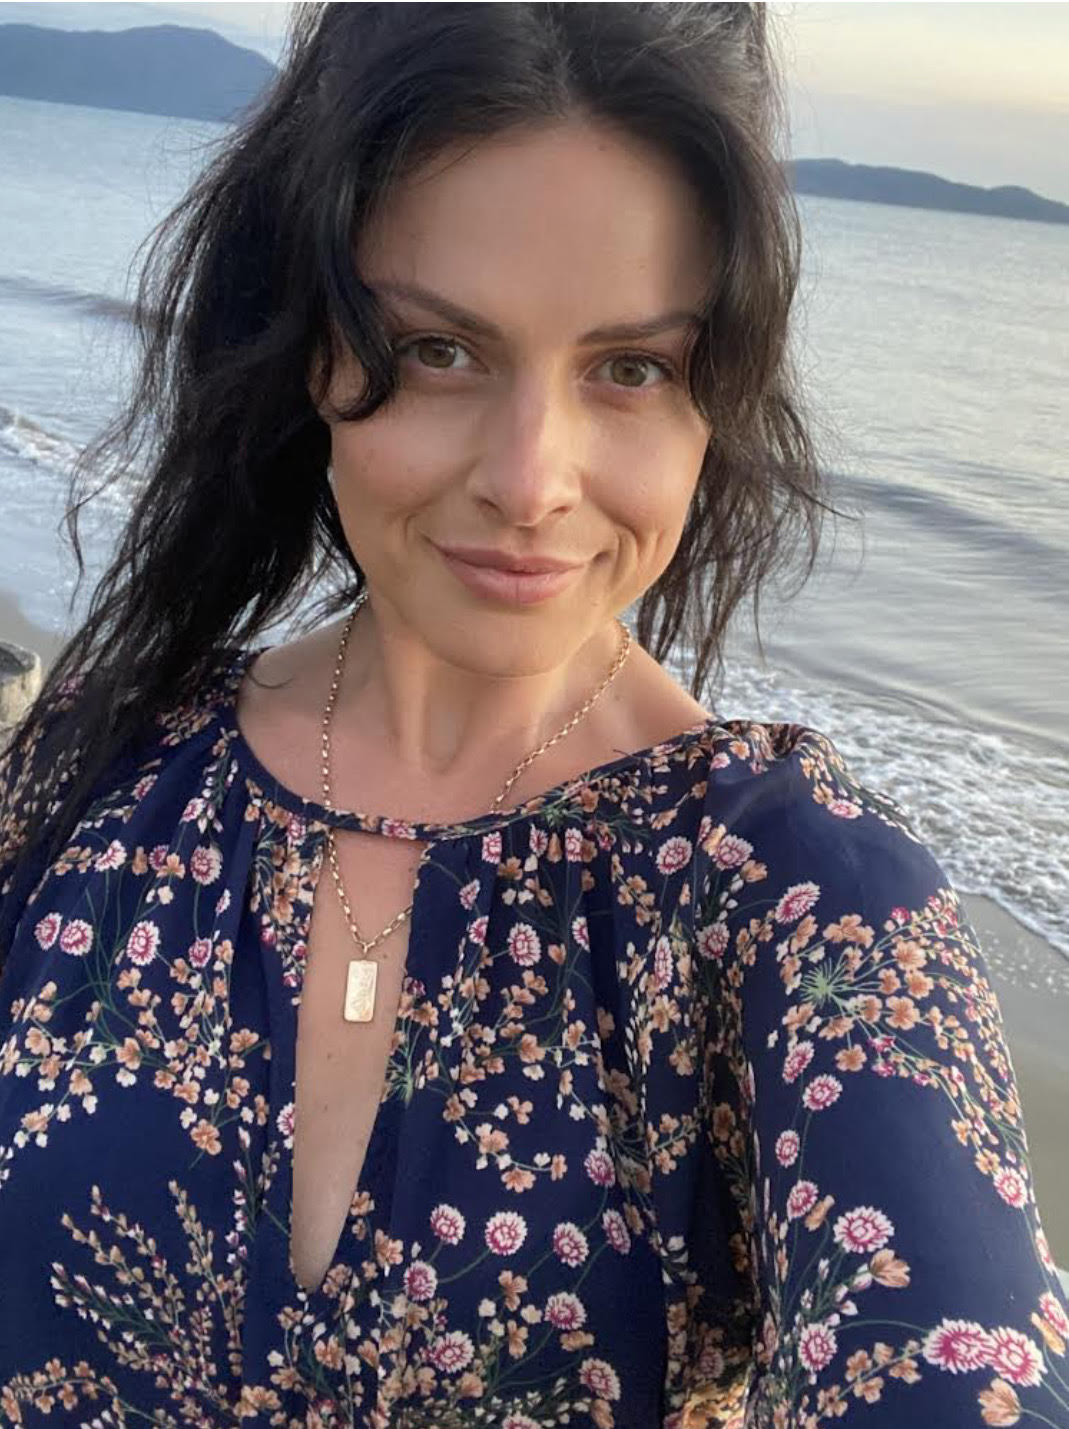 Pretty Good Facial’s founder, Megan Calkin on the Kapiti Coast beach showing off her flawless skin